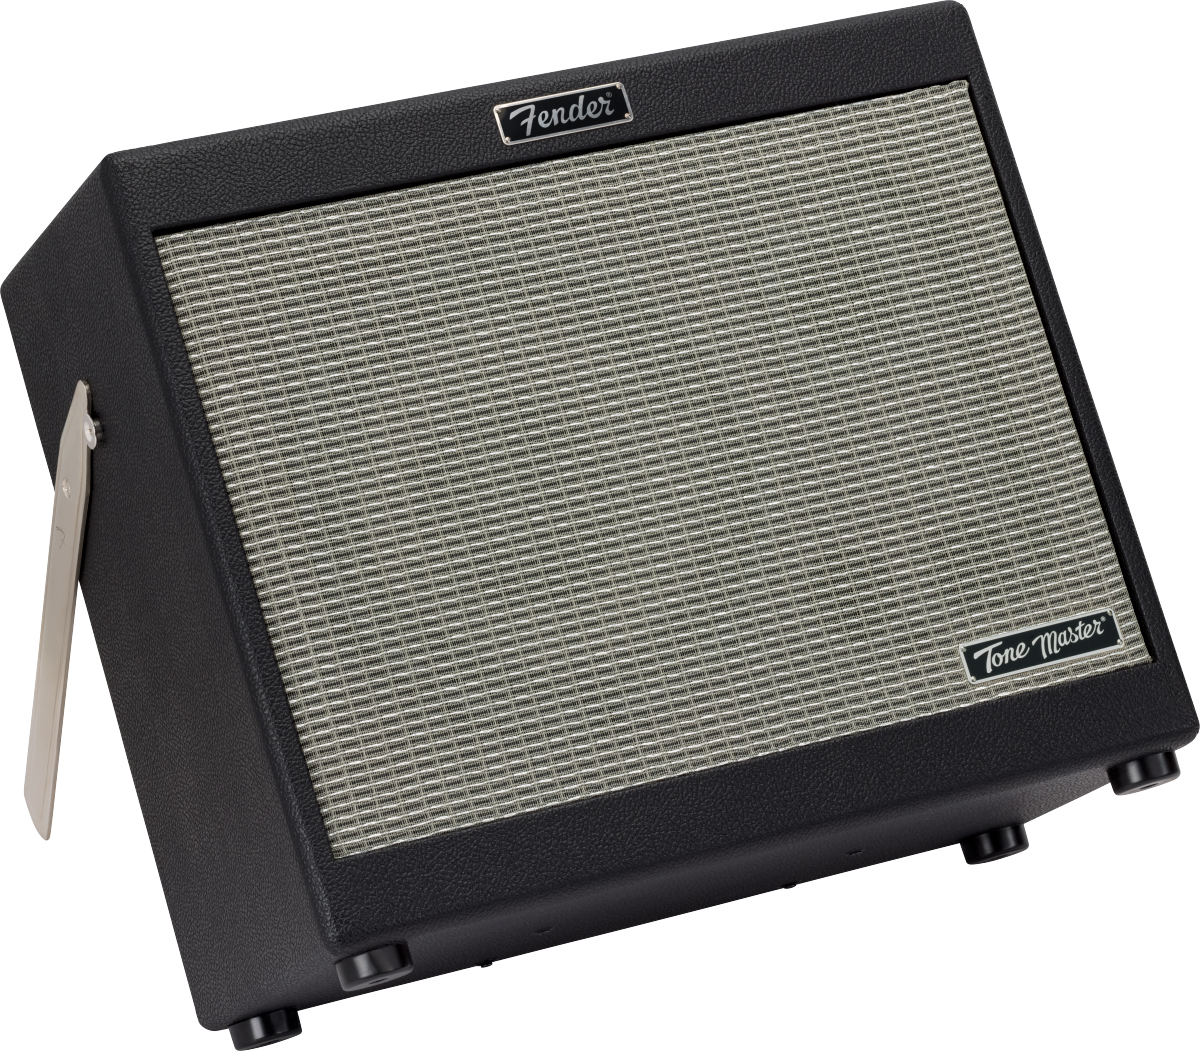 Fender Tone Master Fr-10 Powered Speaker Cab 1x10 1000w - Combo amplificador para guitarra eléctrica - Variation 3